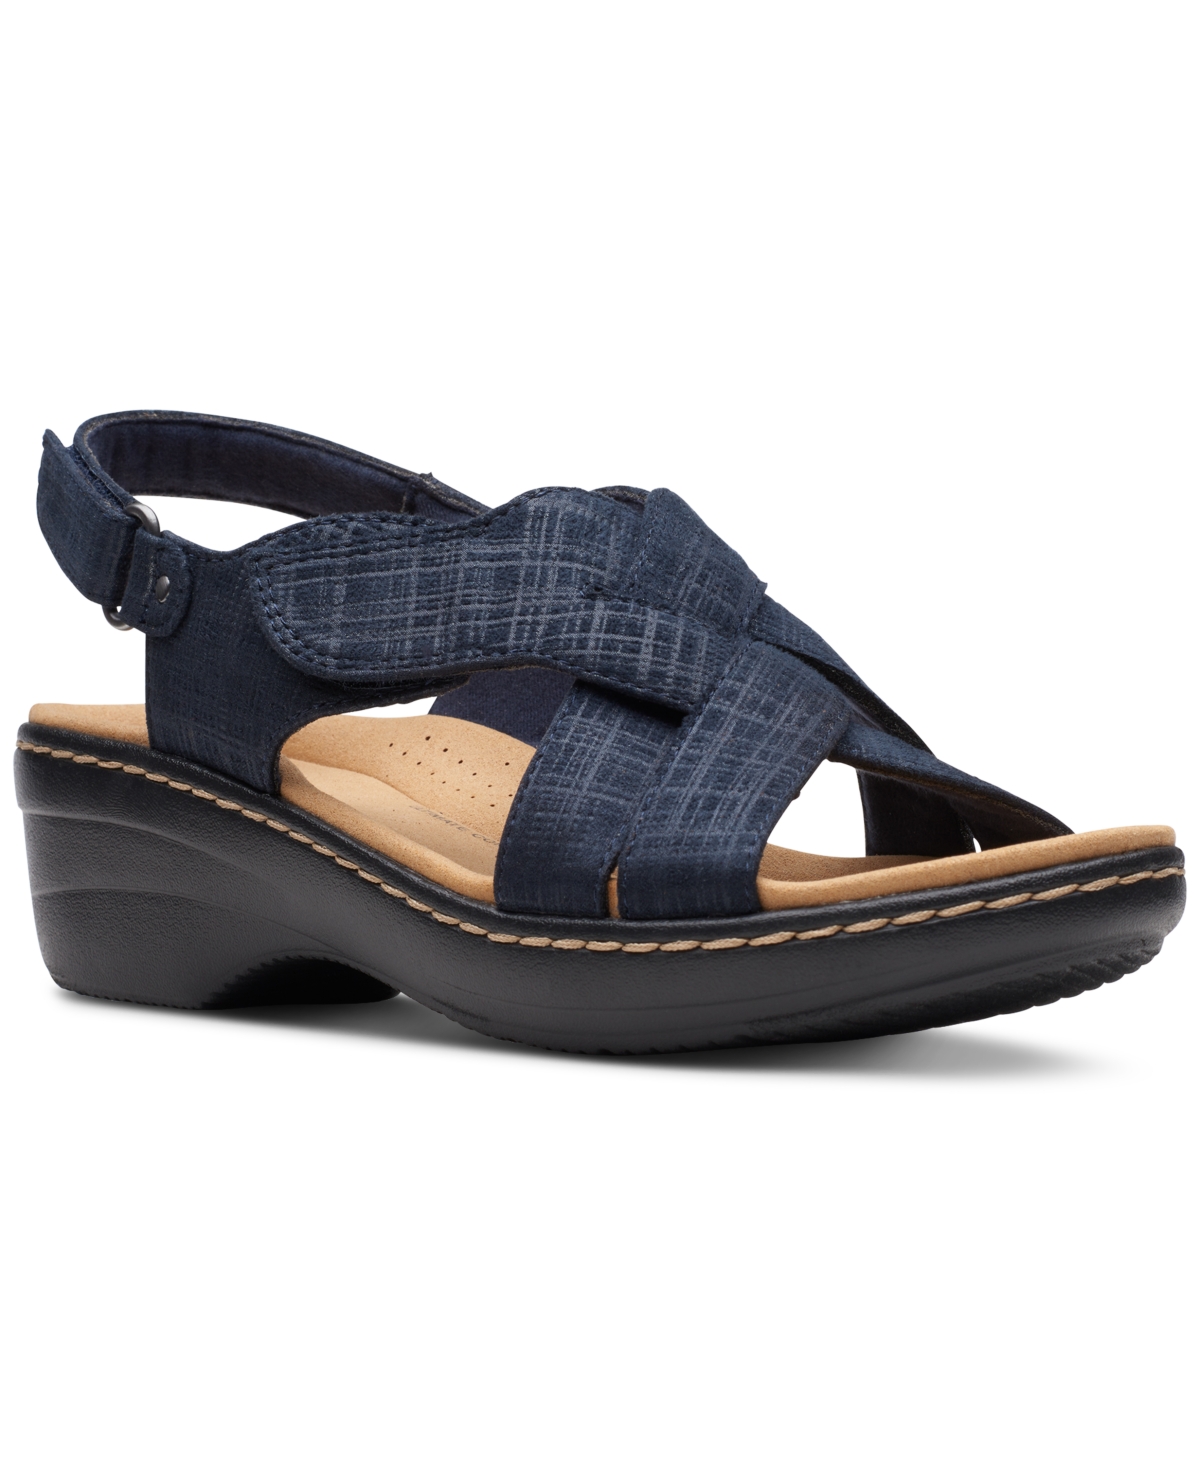 Clarks Women's Merliah Echo Slip-On Slingback Wedge Sandals Women's Shoes